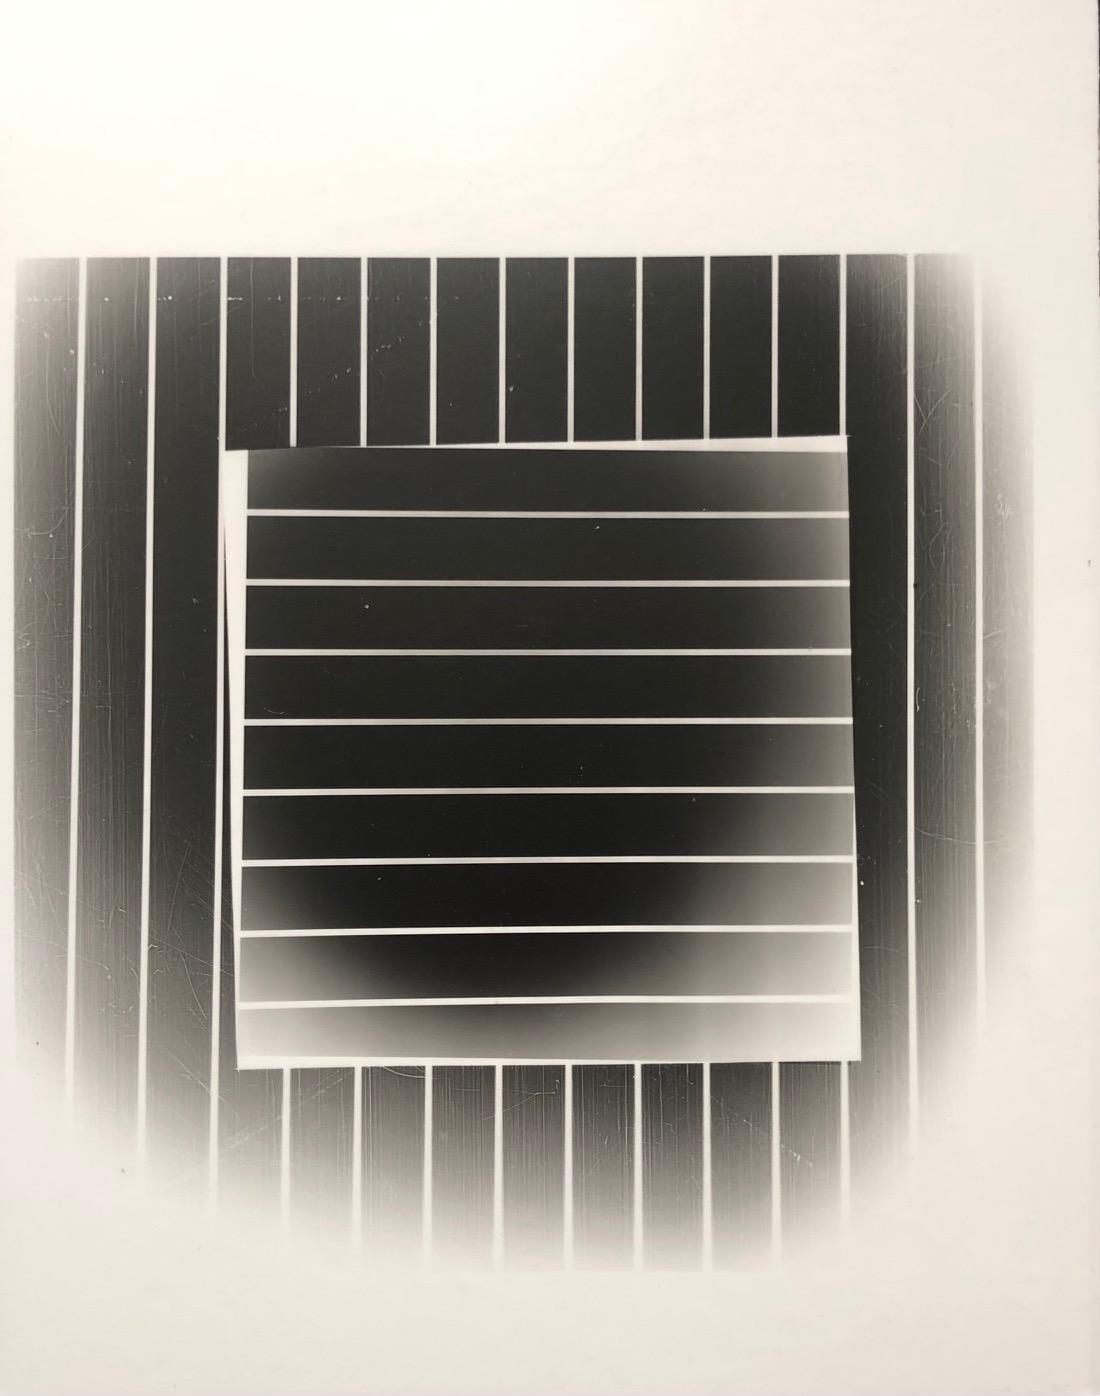 Juan Fernandez, Inside Out (Negative), 2021, Laminated silver gelatin print mounted on masonite, 14” x 11” x 1”